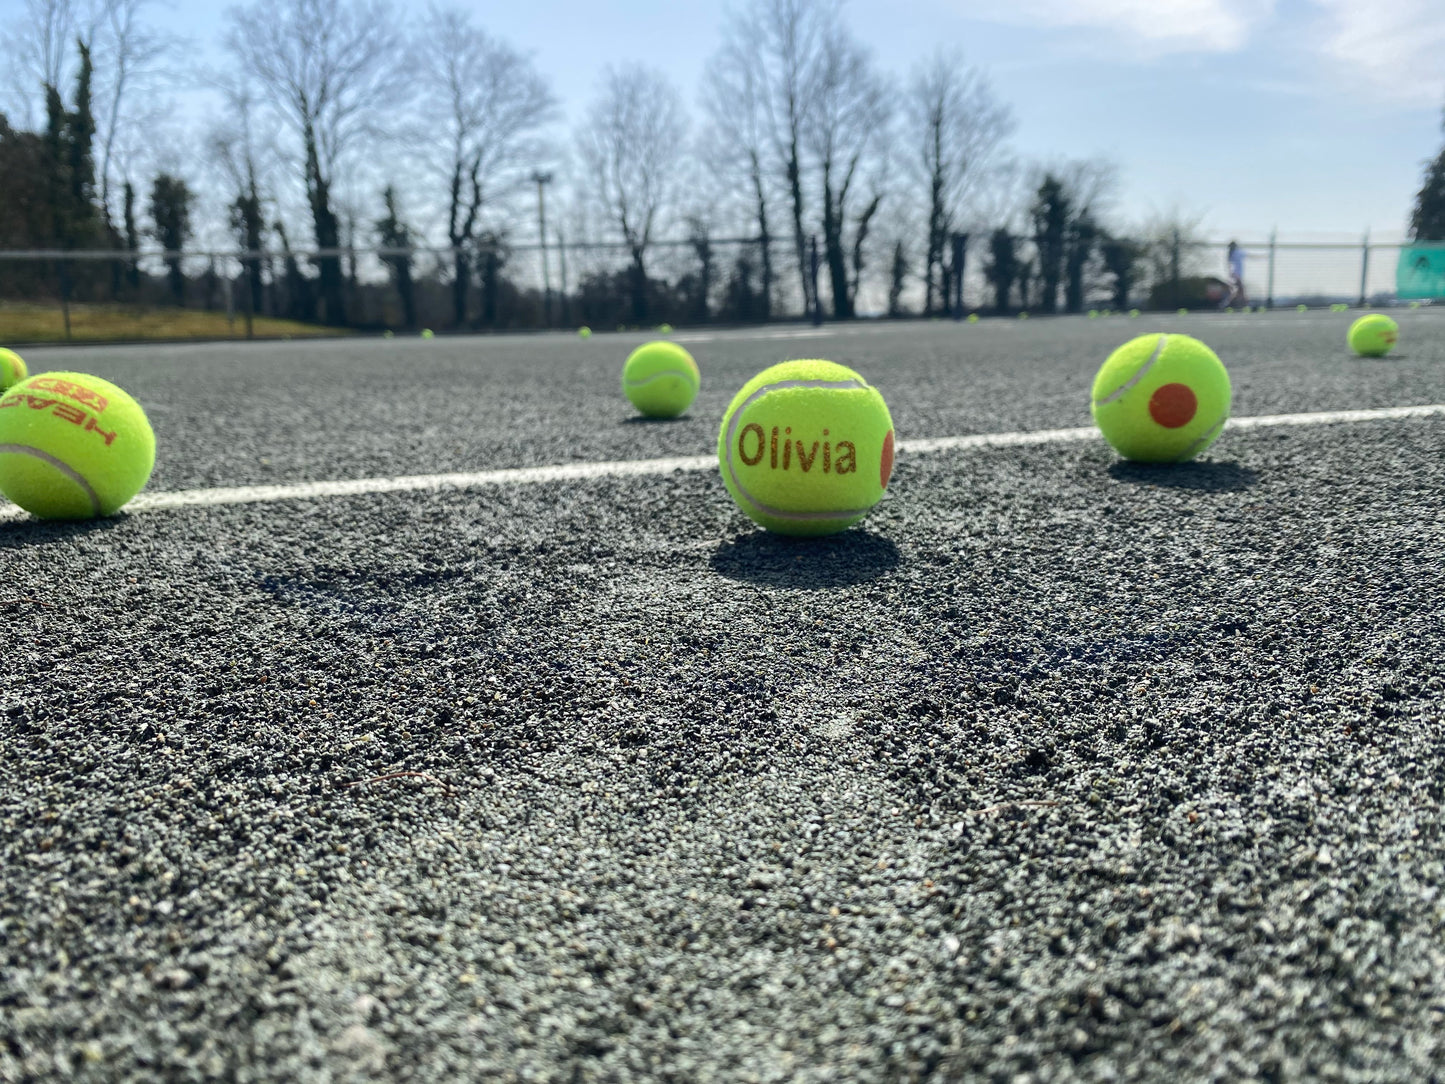 NTB - Personalised Children's Tennis Balls